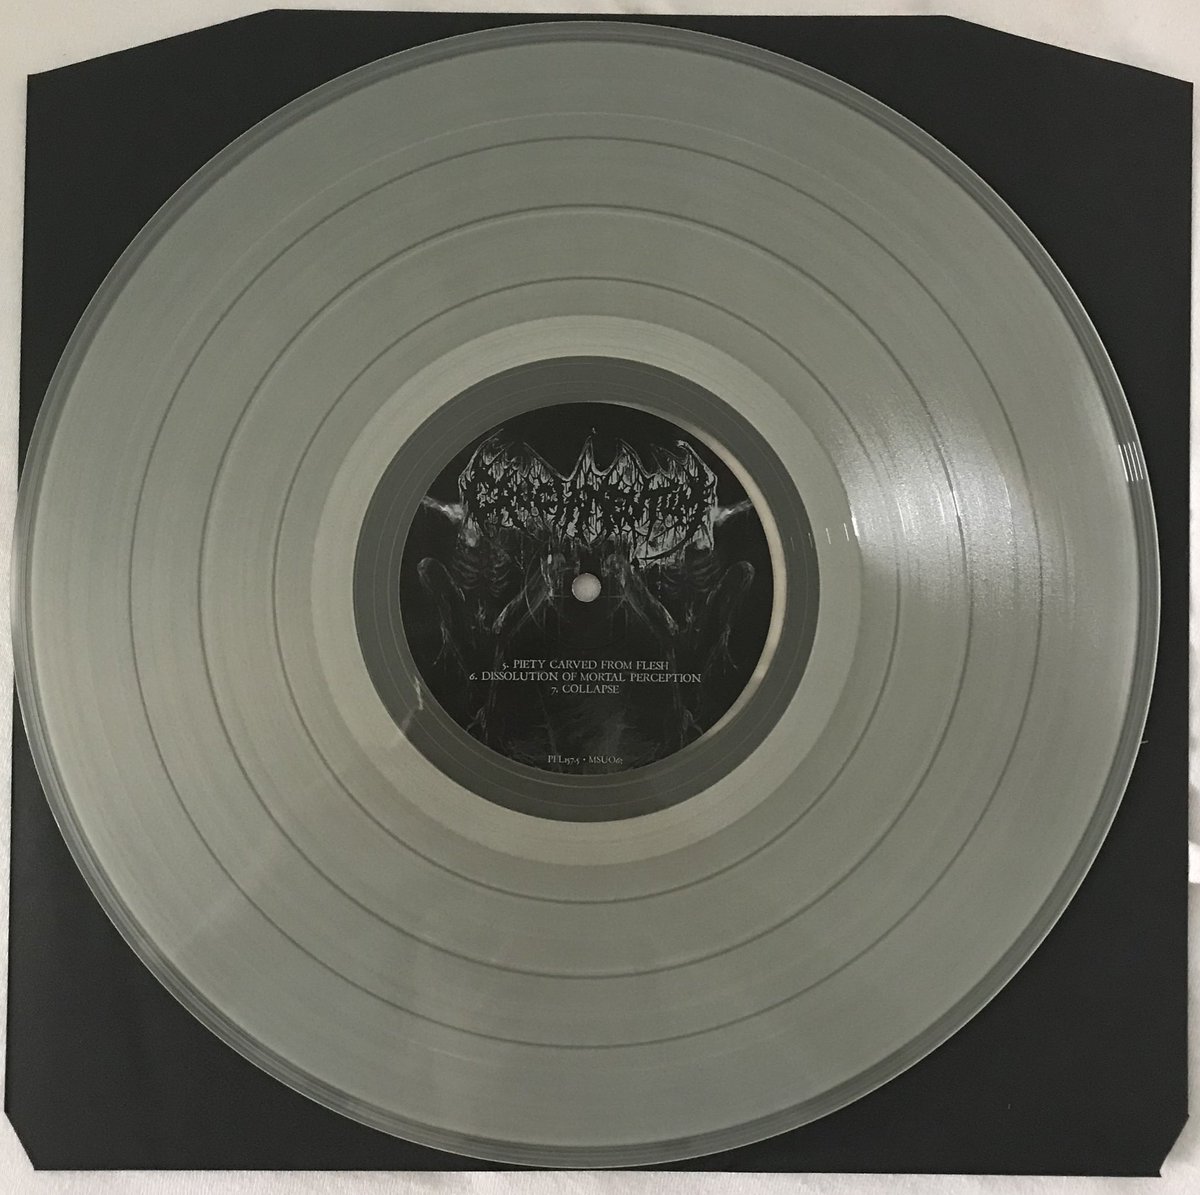 Cruciamentum - Charnel PassagesIncludes:Charnel Passages (LP) - Clear VinylBookletRating: 9/10